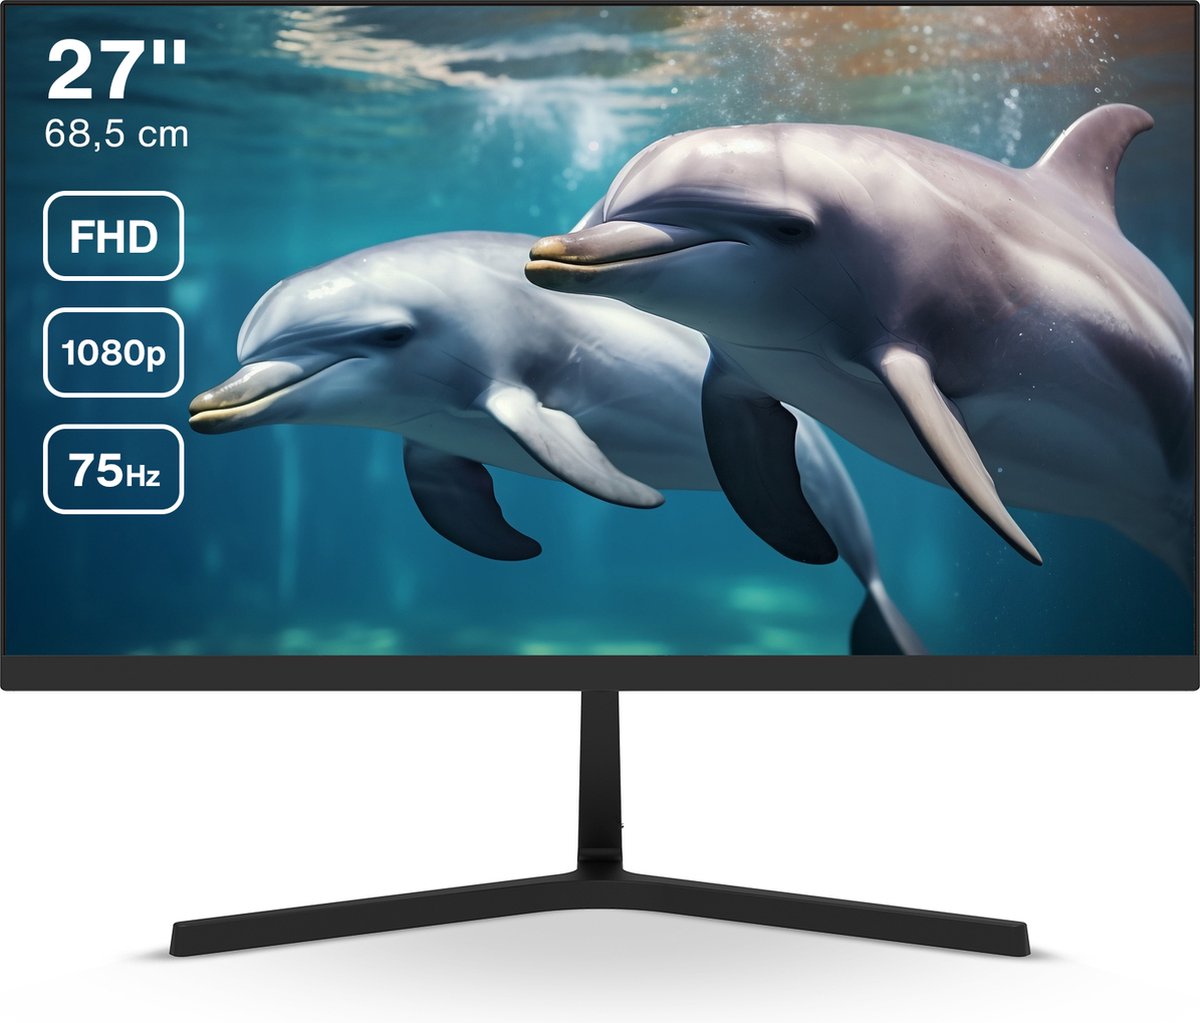 Dahua LM27-B201S - Full HD IPS Monitor - 75 Hz - 27 inch - Inclusief HDMI kabel